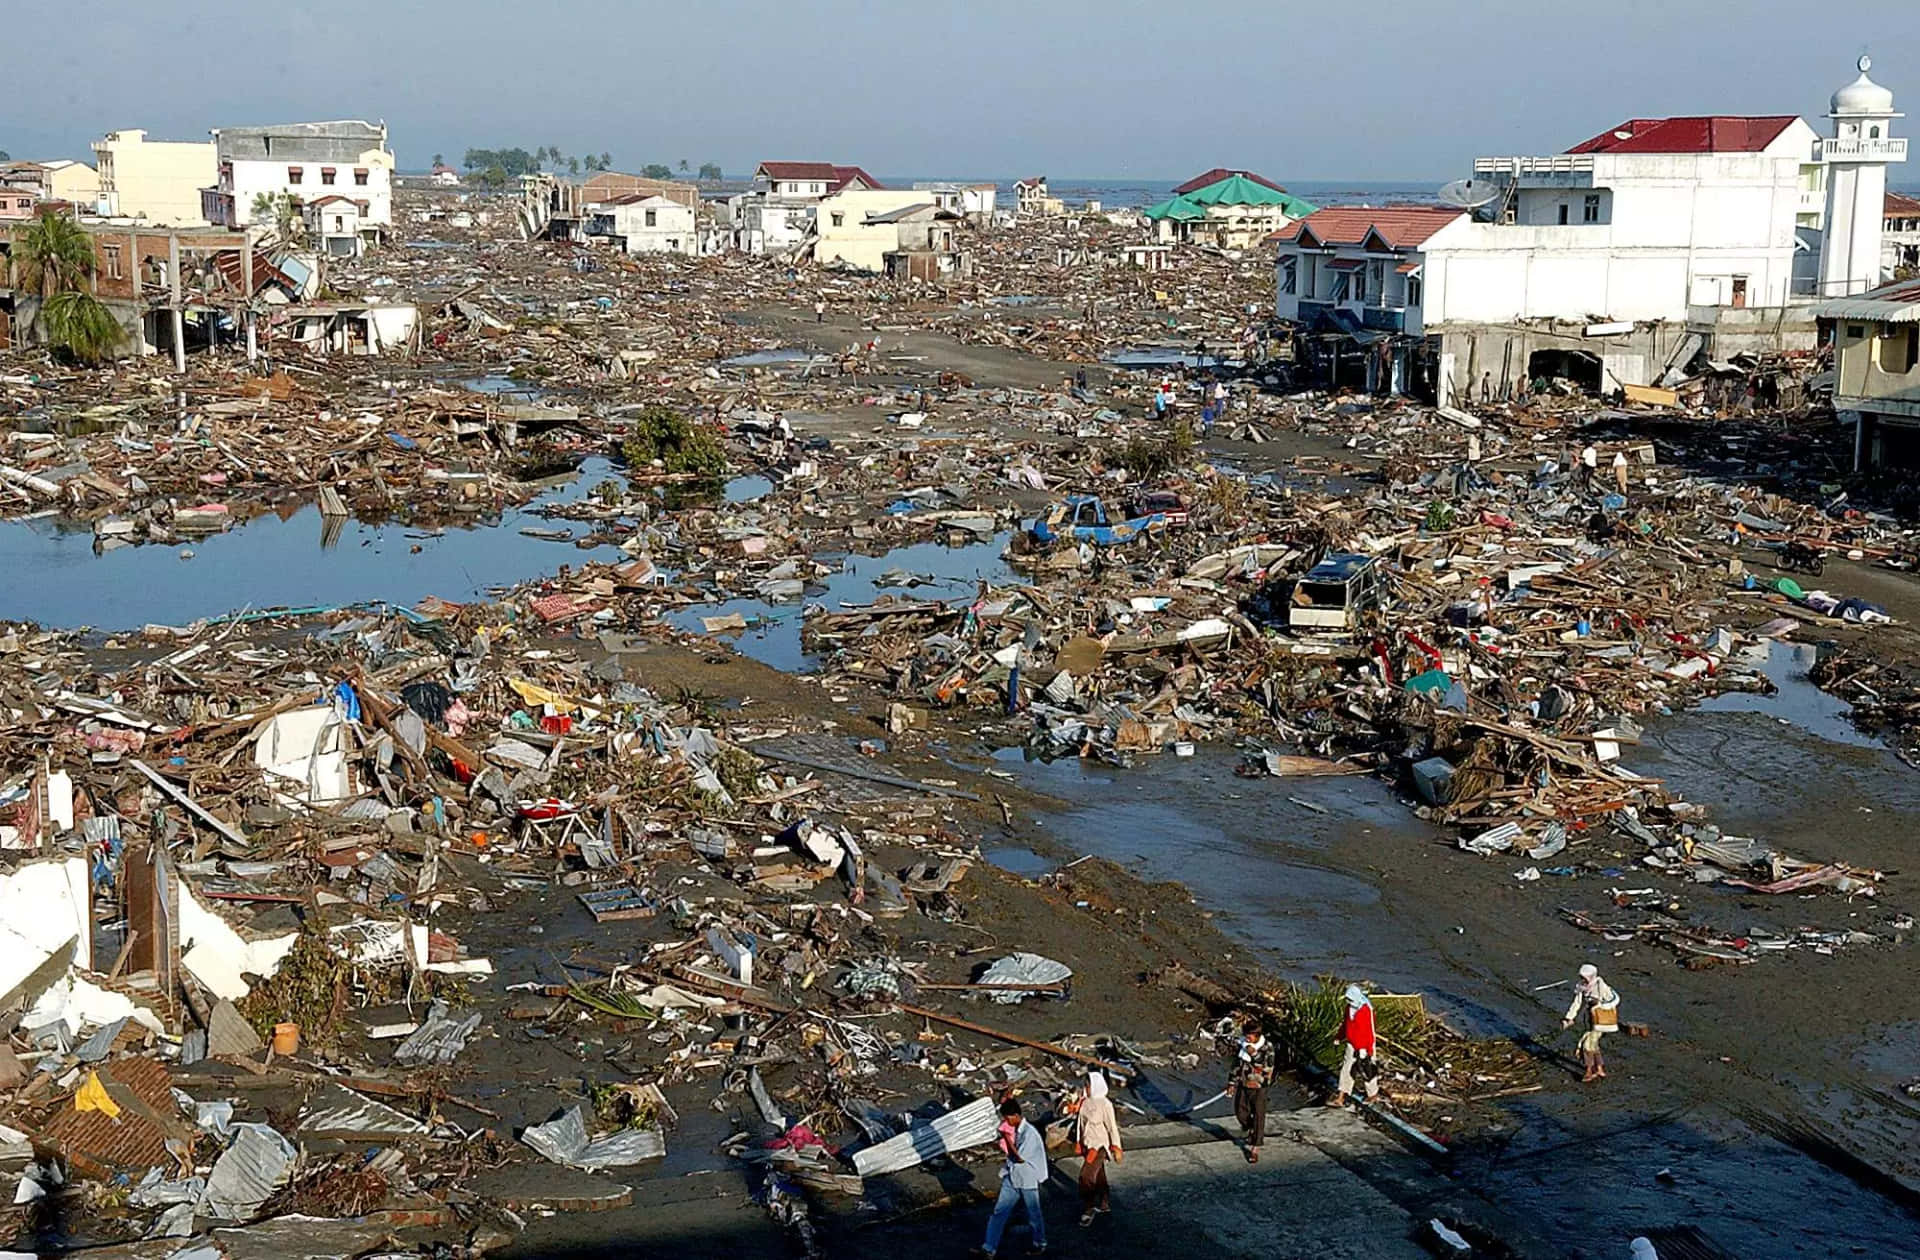 Powerful Tsunami waves crashing in the waters of a coastal city